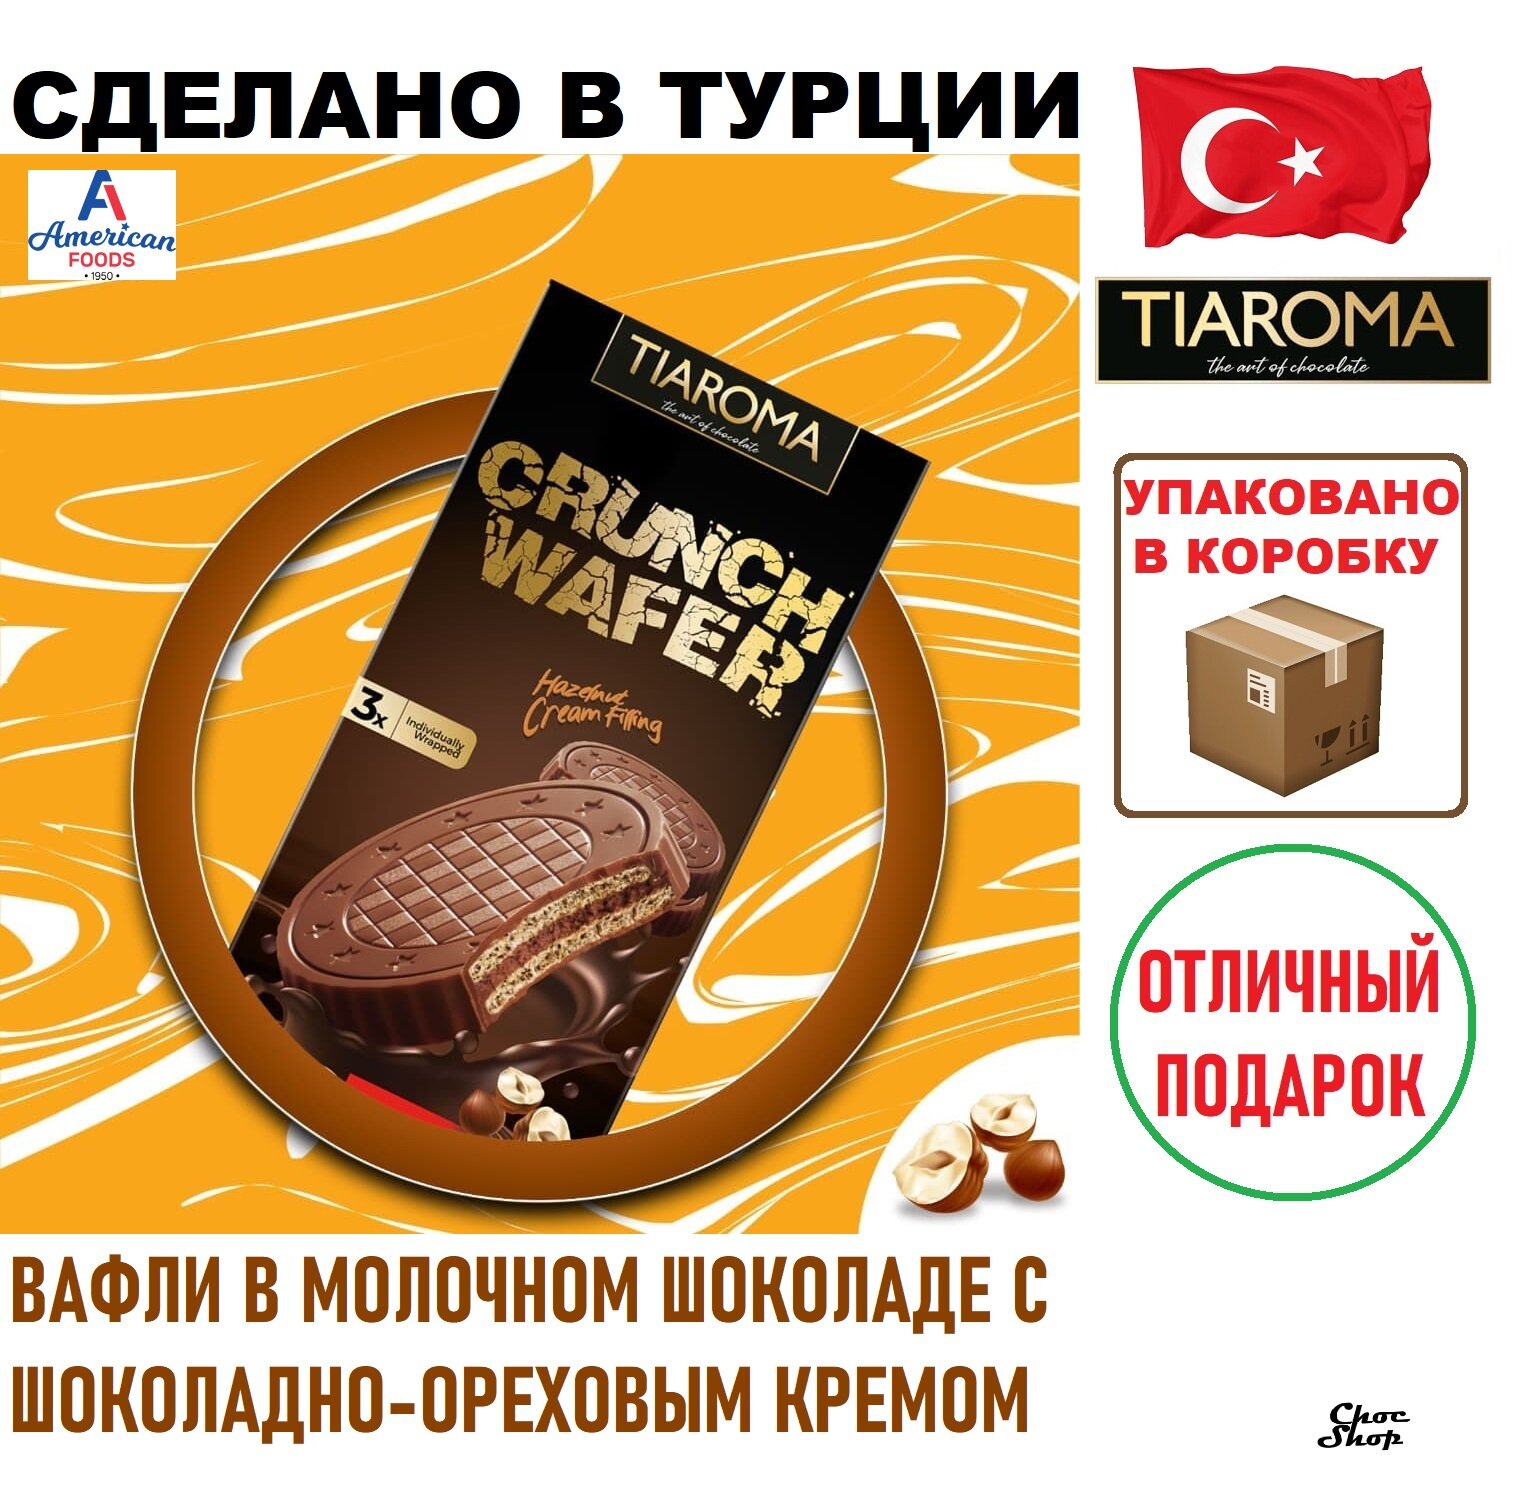 Вафли TIAROMA CRUNCH WAFER с кремом из лесного ореха в молочном шоколаде нетто 60г (3Х20)